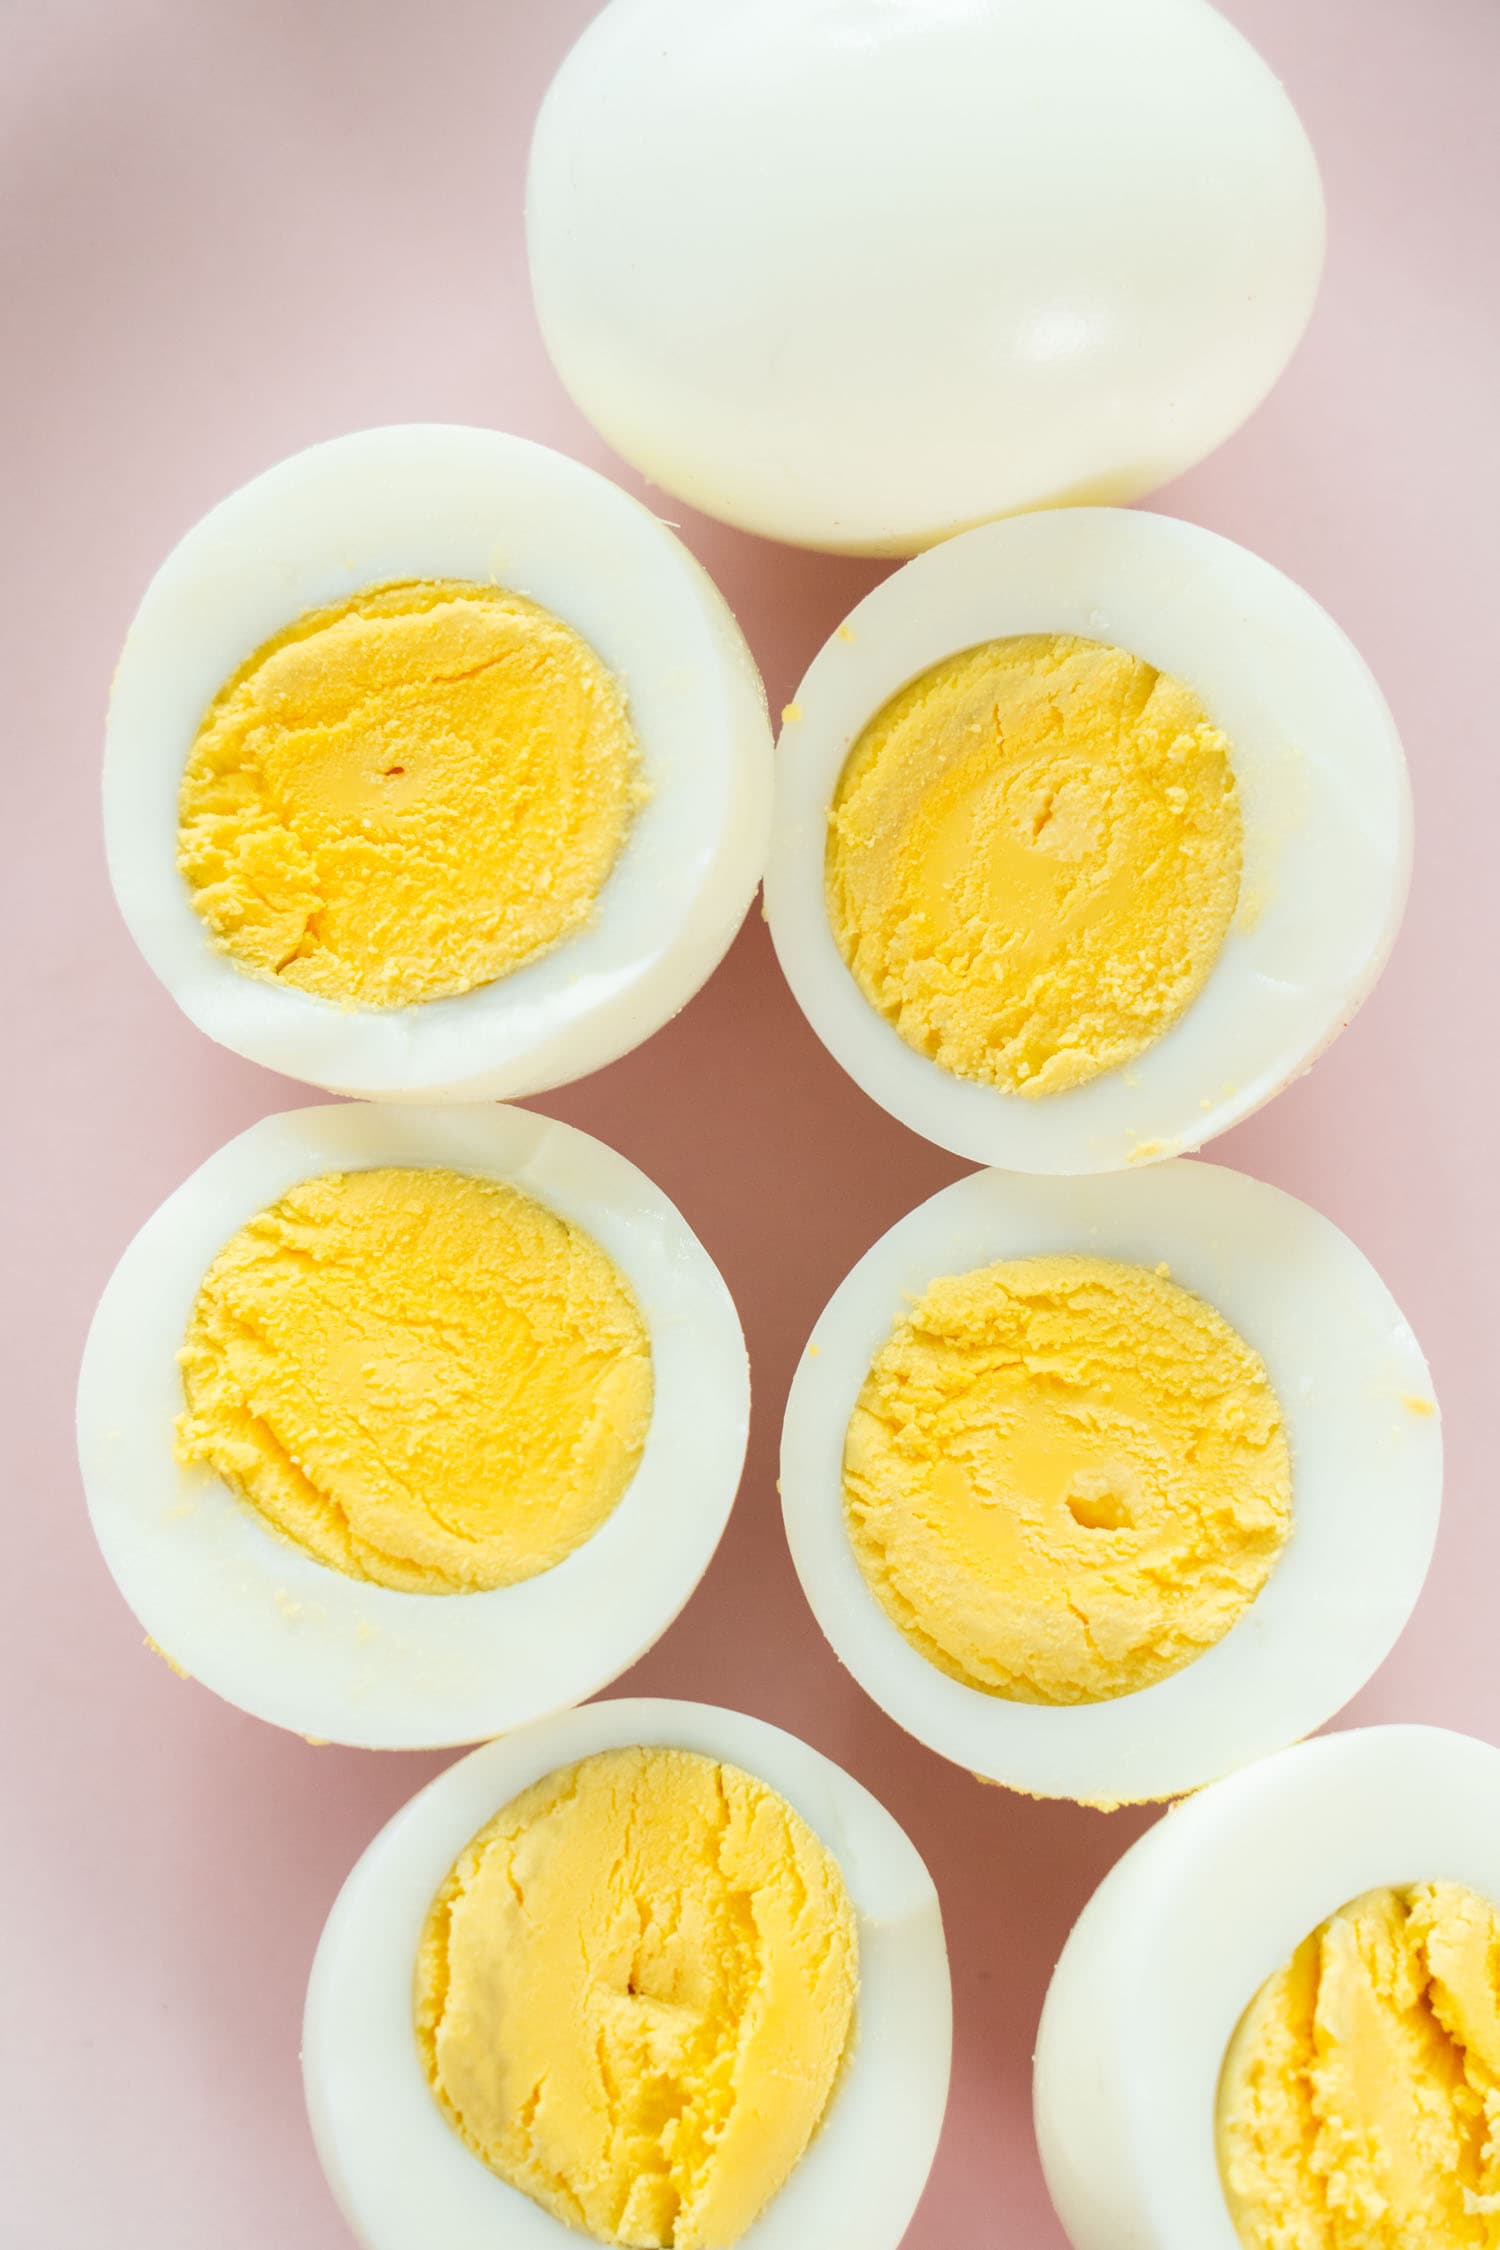 https://brooklynfarmgirl.com/wp-content/uploads/2022/06/How-to-Make-Perfect-Hard-Boiled-Eggs_12.jpg